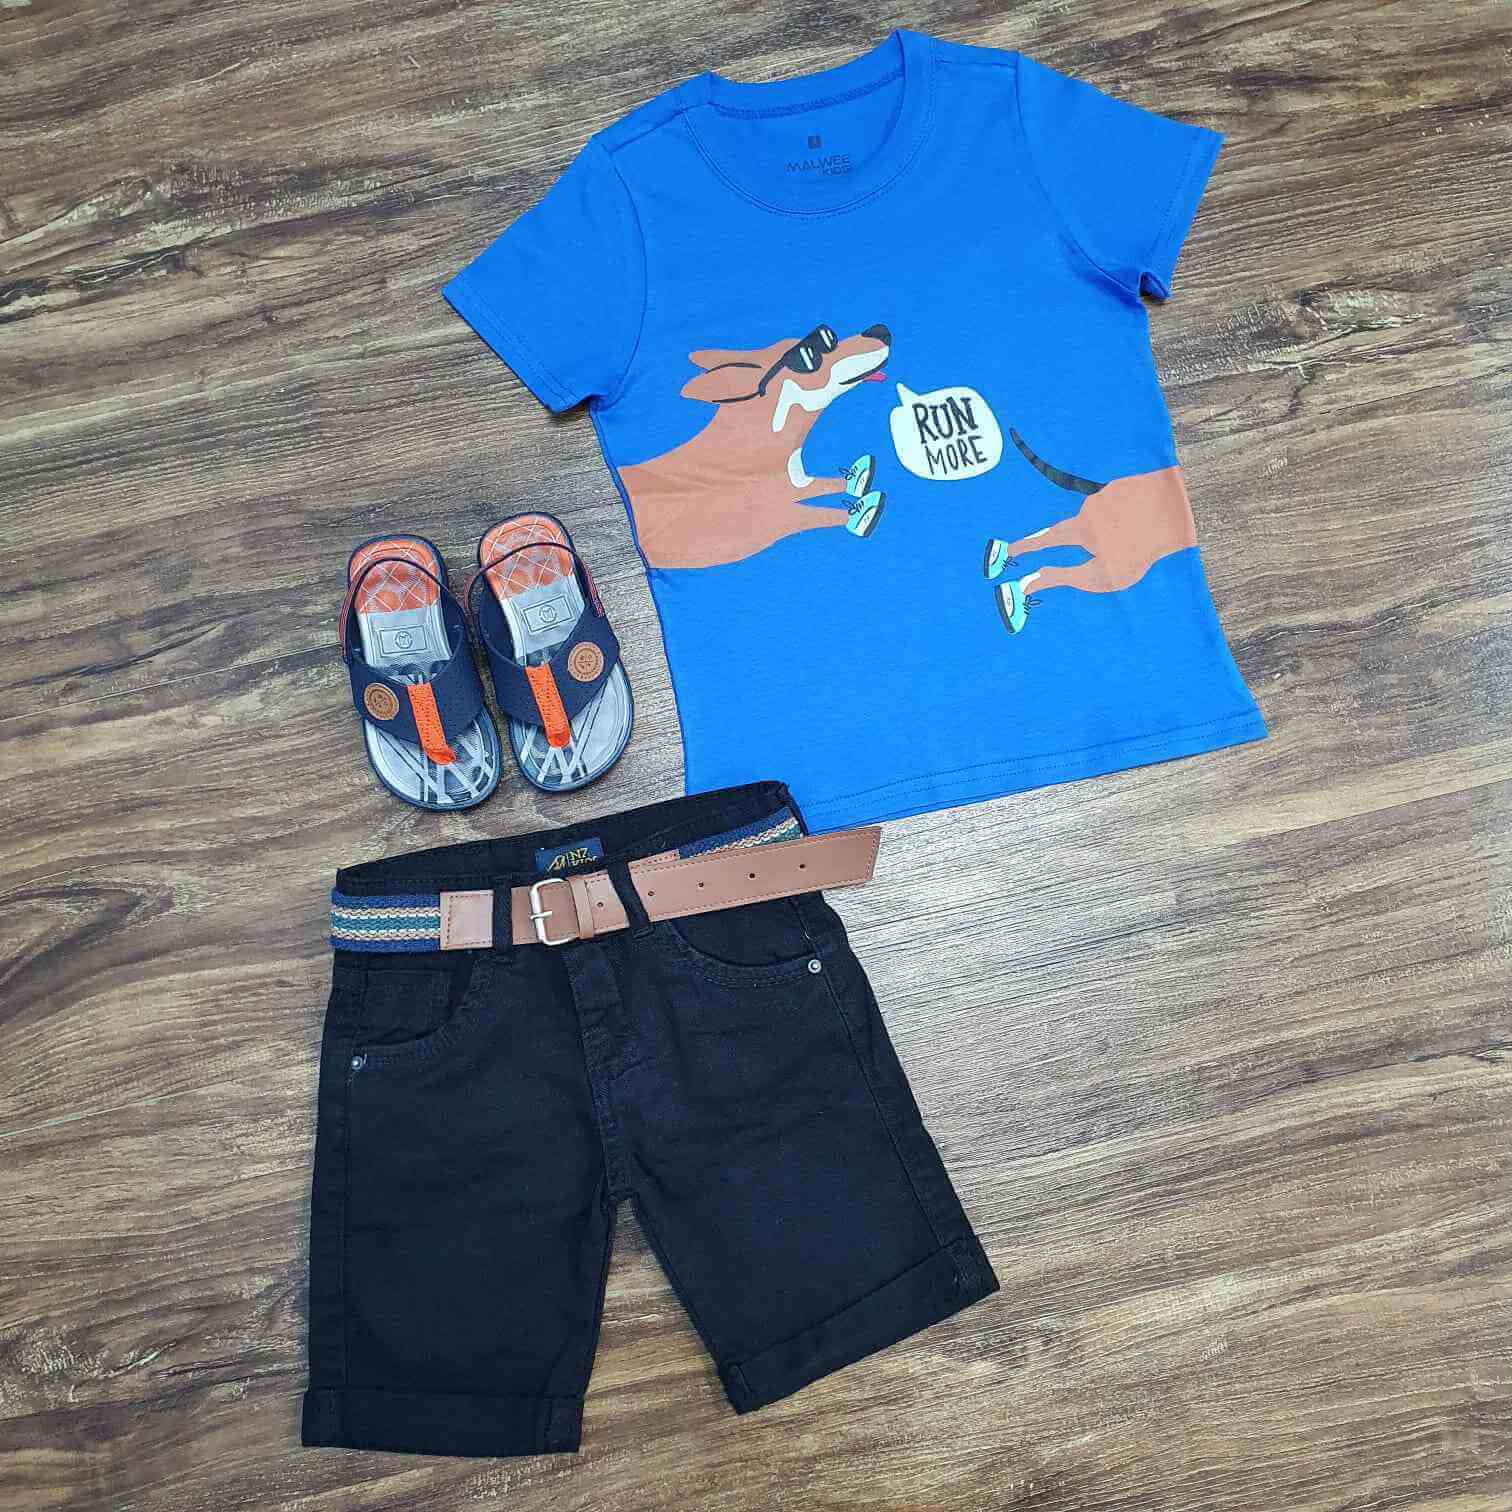 Camiseta Azul Run More com Bermuda Preta Infantil